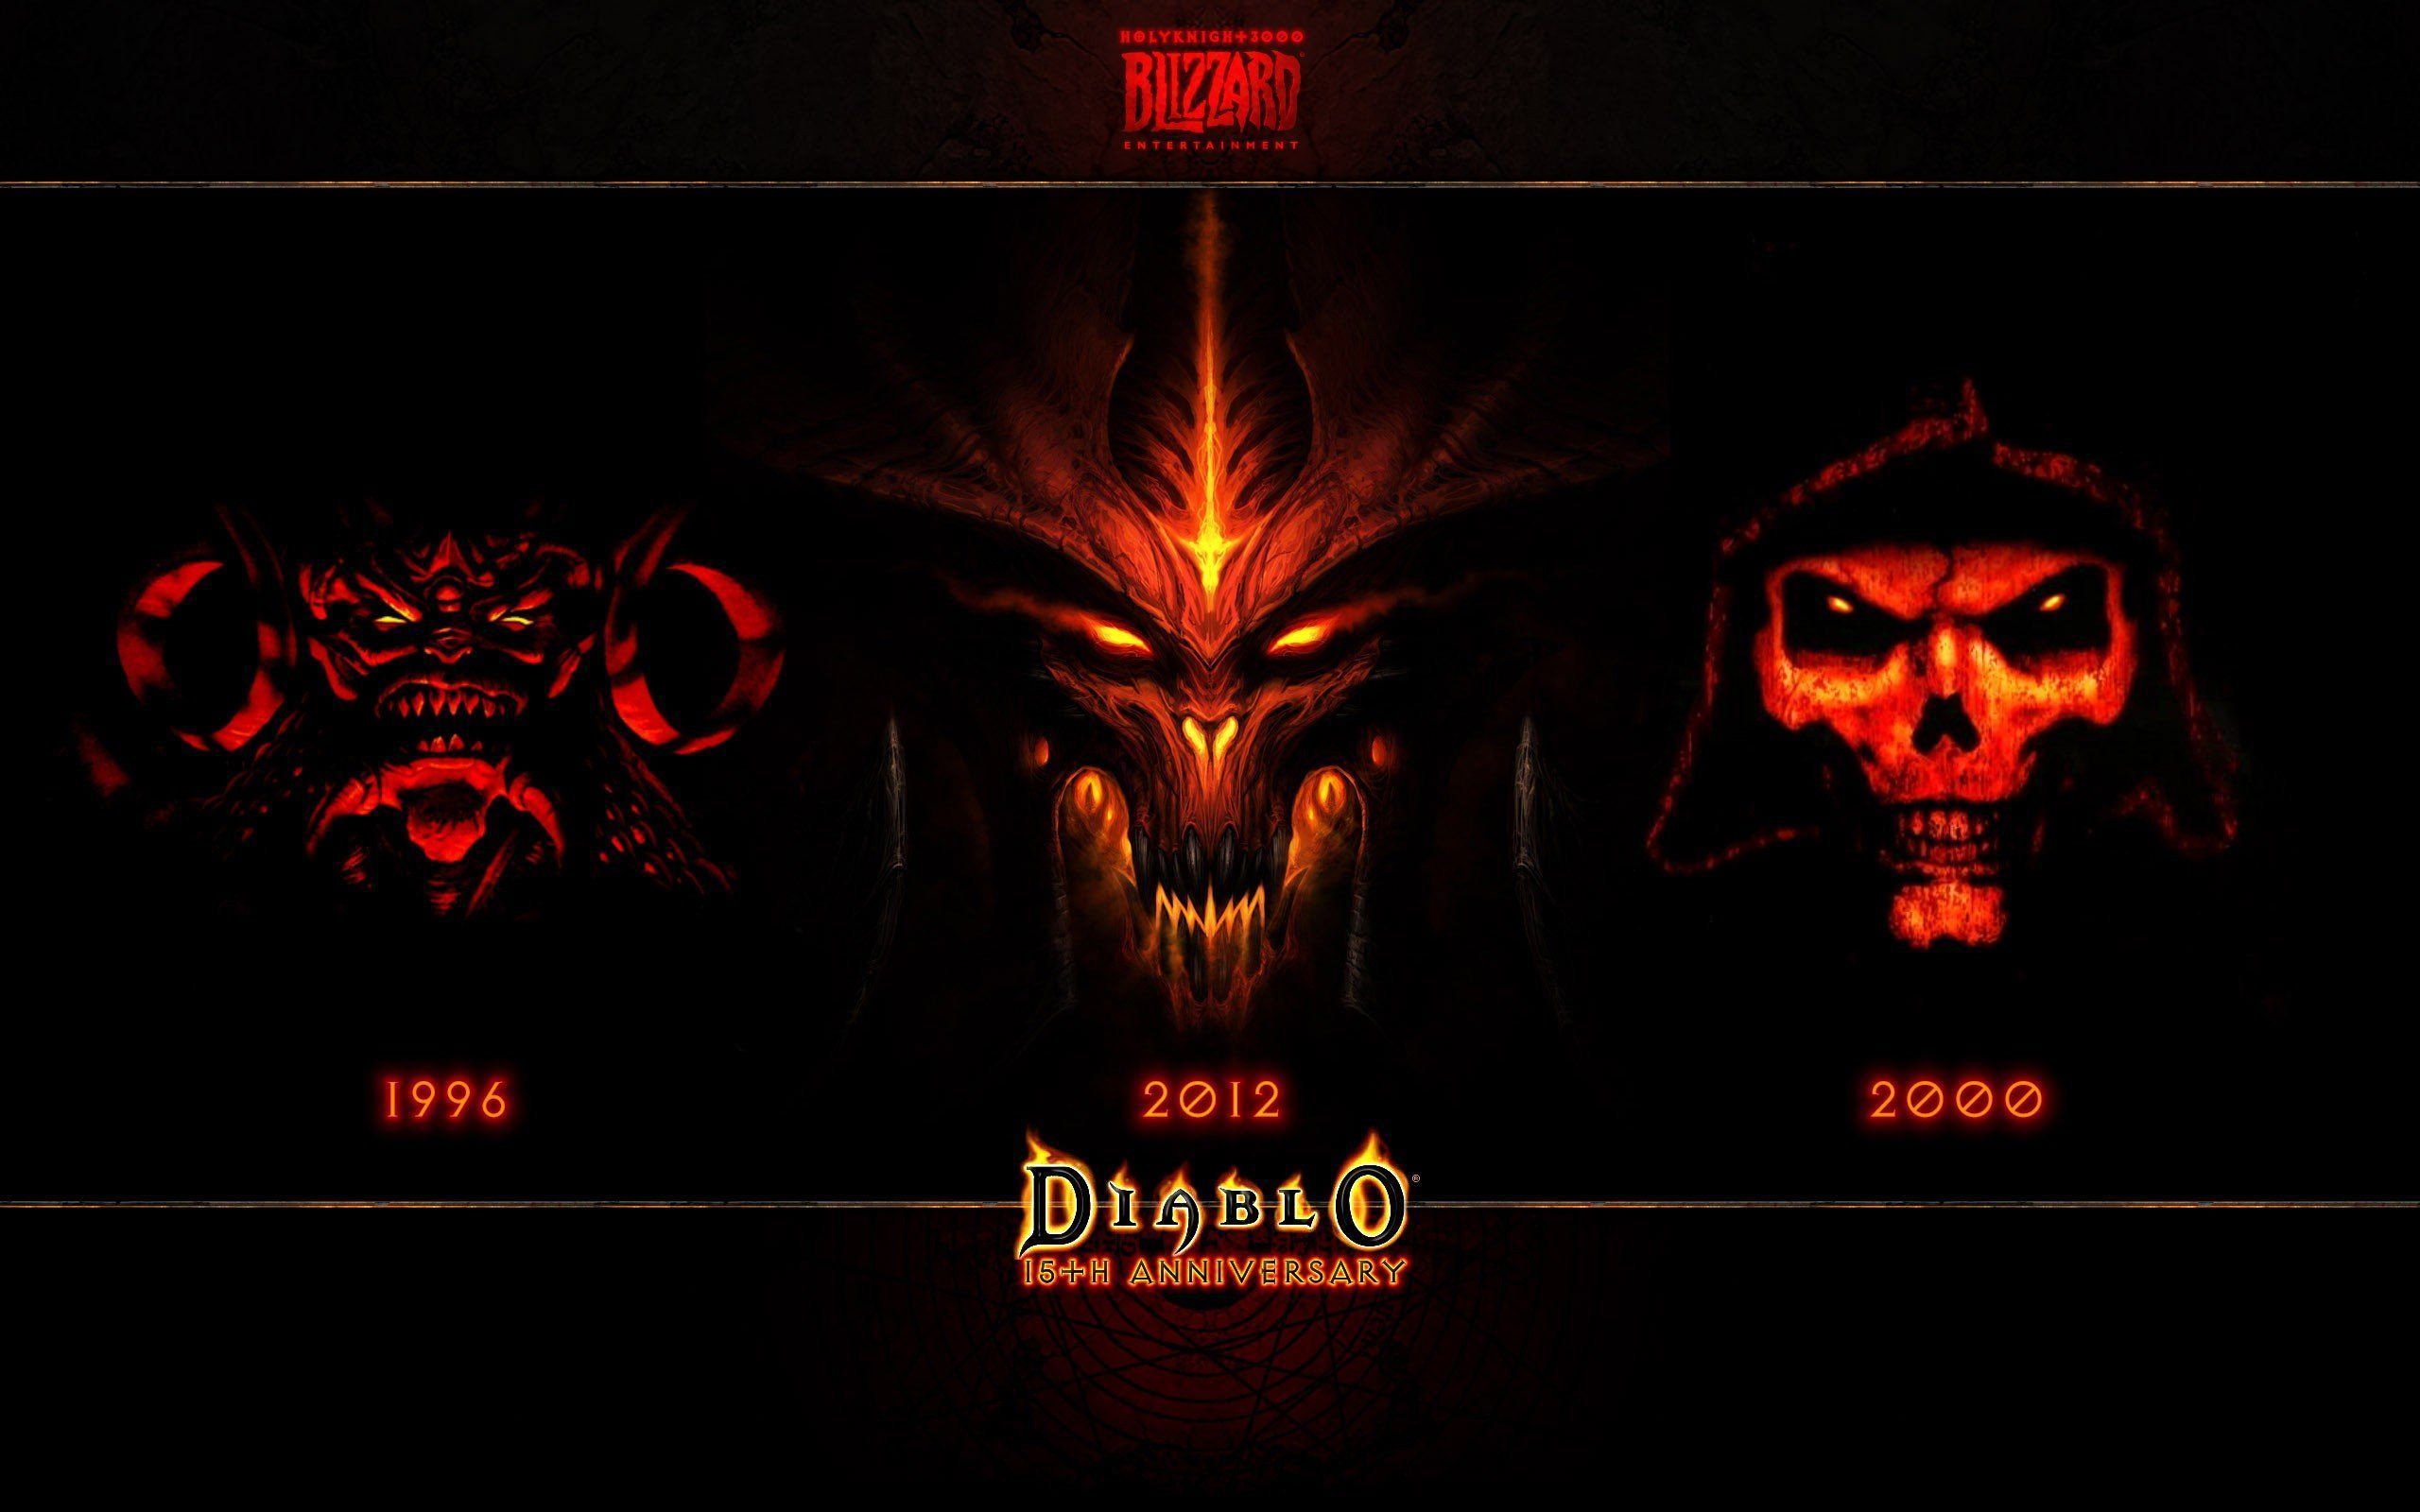 Diablo Blizzard Entertainment Diablo III anniversary wallpaper